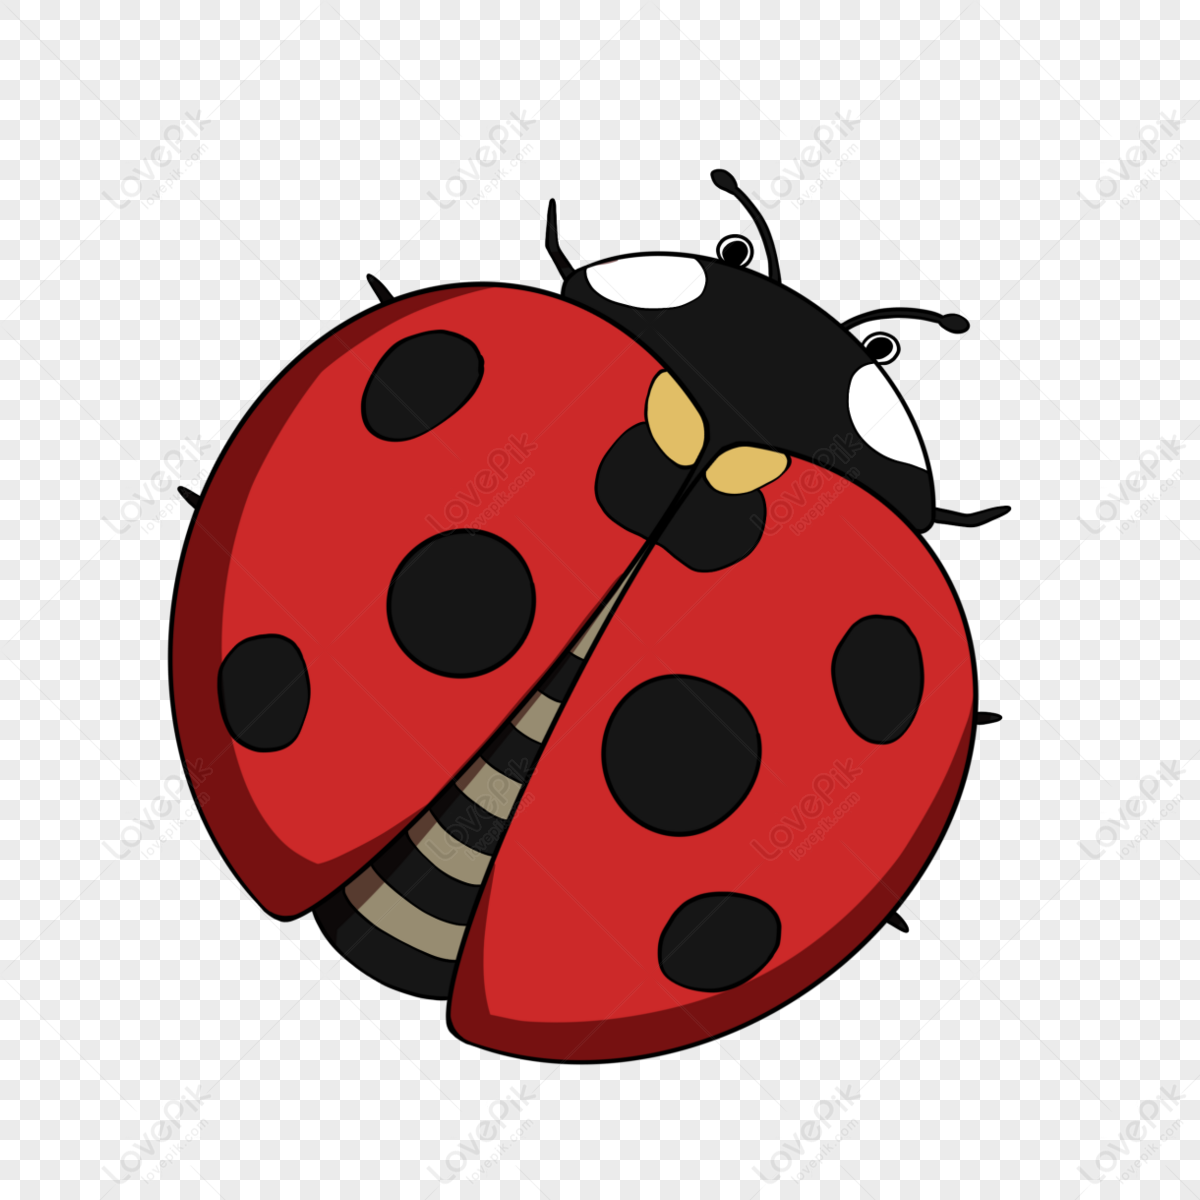 Ladybug Naughty Inverted Play Cartoon PNG , Ladybug, Pino, Acrobacia Imagem  PNG e PSD Para Download Gratuito